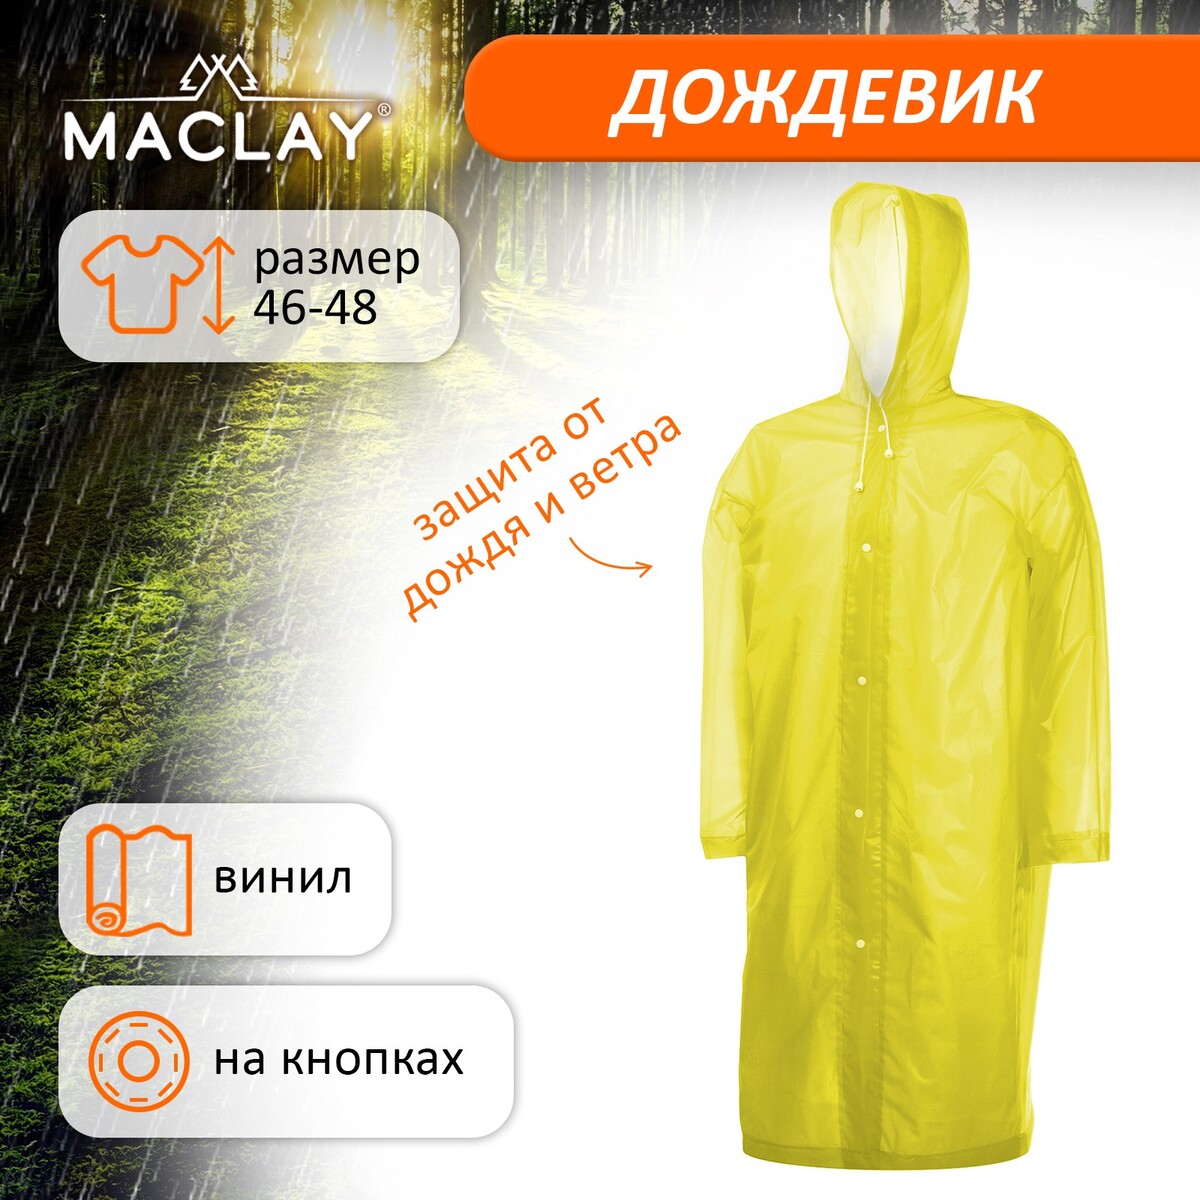 фото Дождевик-плащ maclay, р. 46-48, цвет желтый